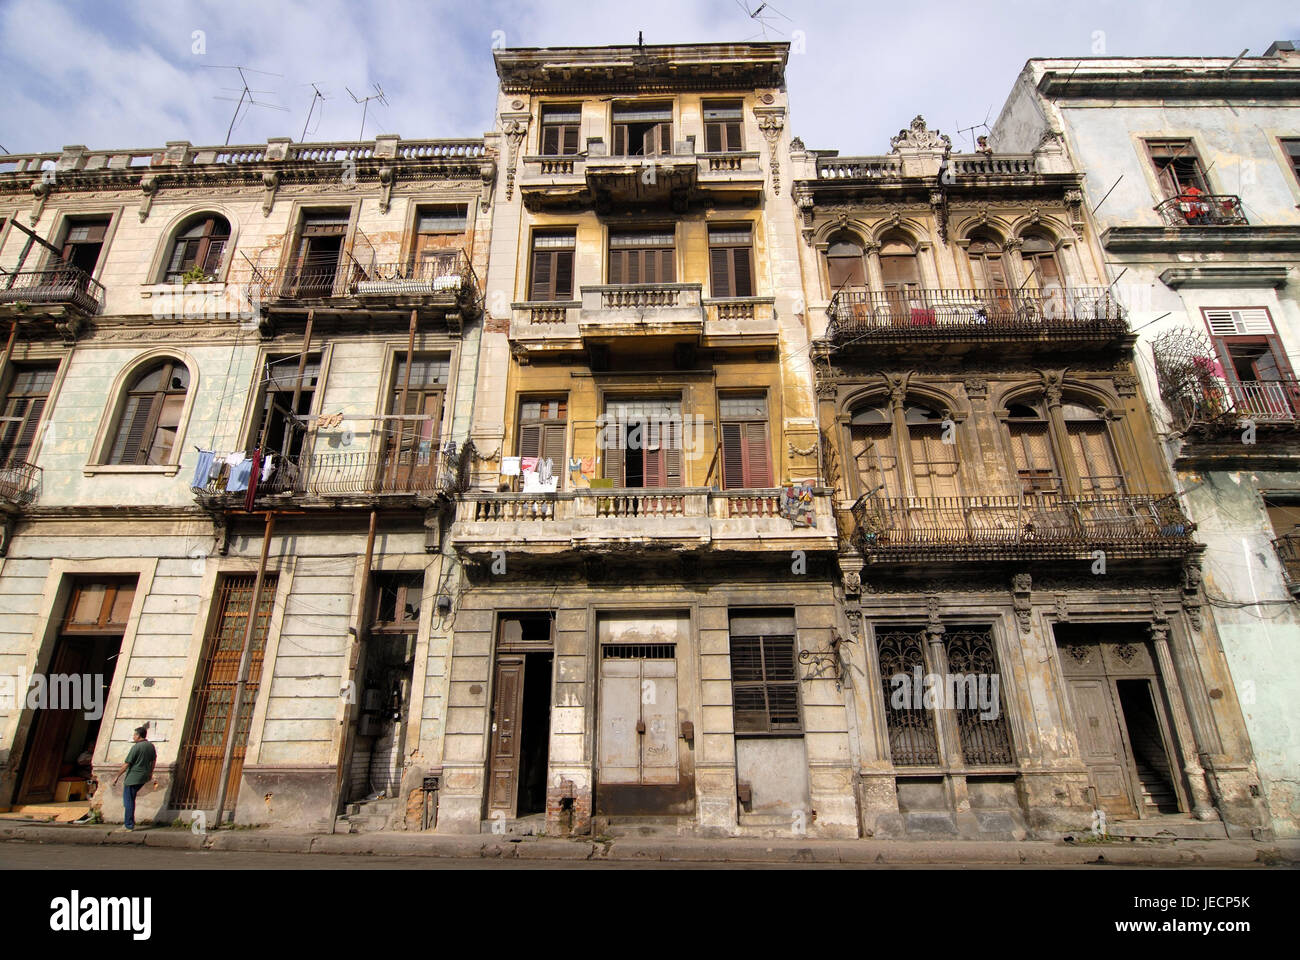 Cuba, Havana, house facades, neglectedly, the Caribbean, island, houses, residential houses, buildings, facades, old, dilapidatedly, renovation-destitute, city centre, destination, tourism, Stock Photo